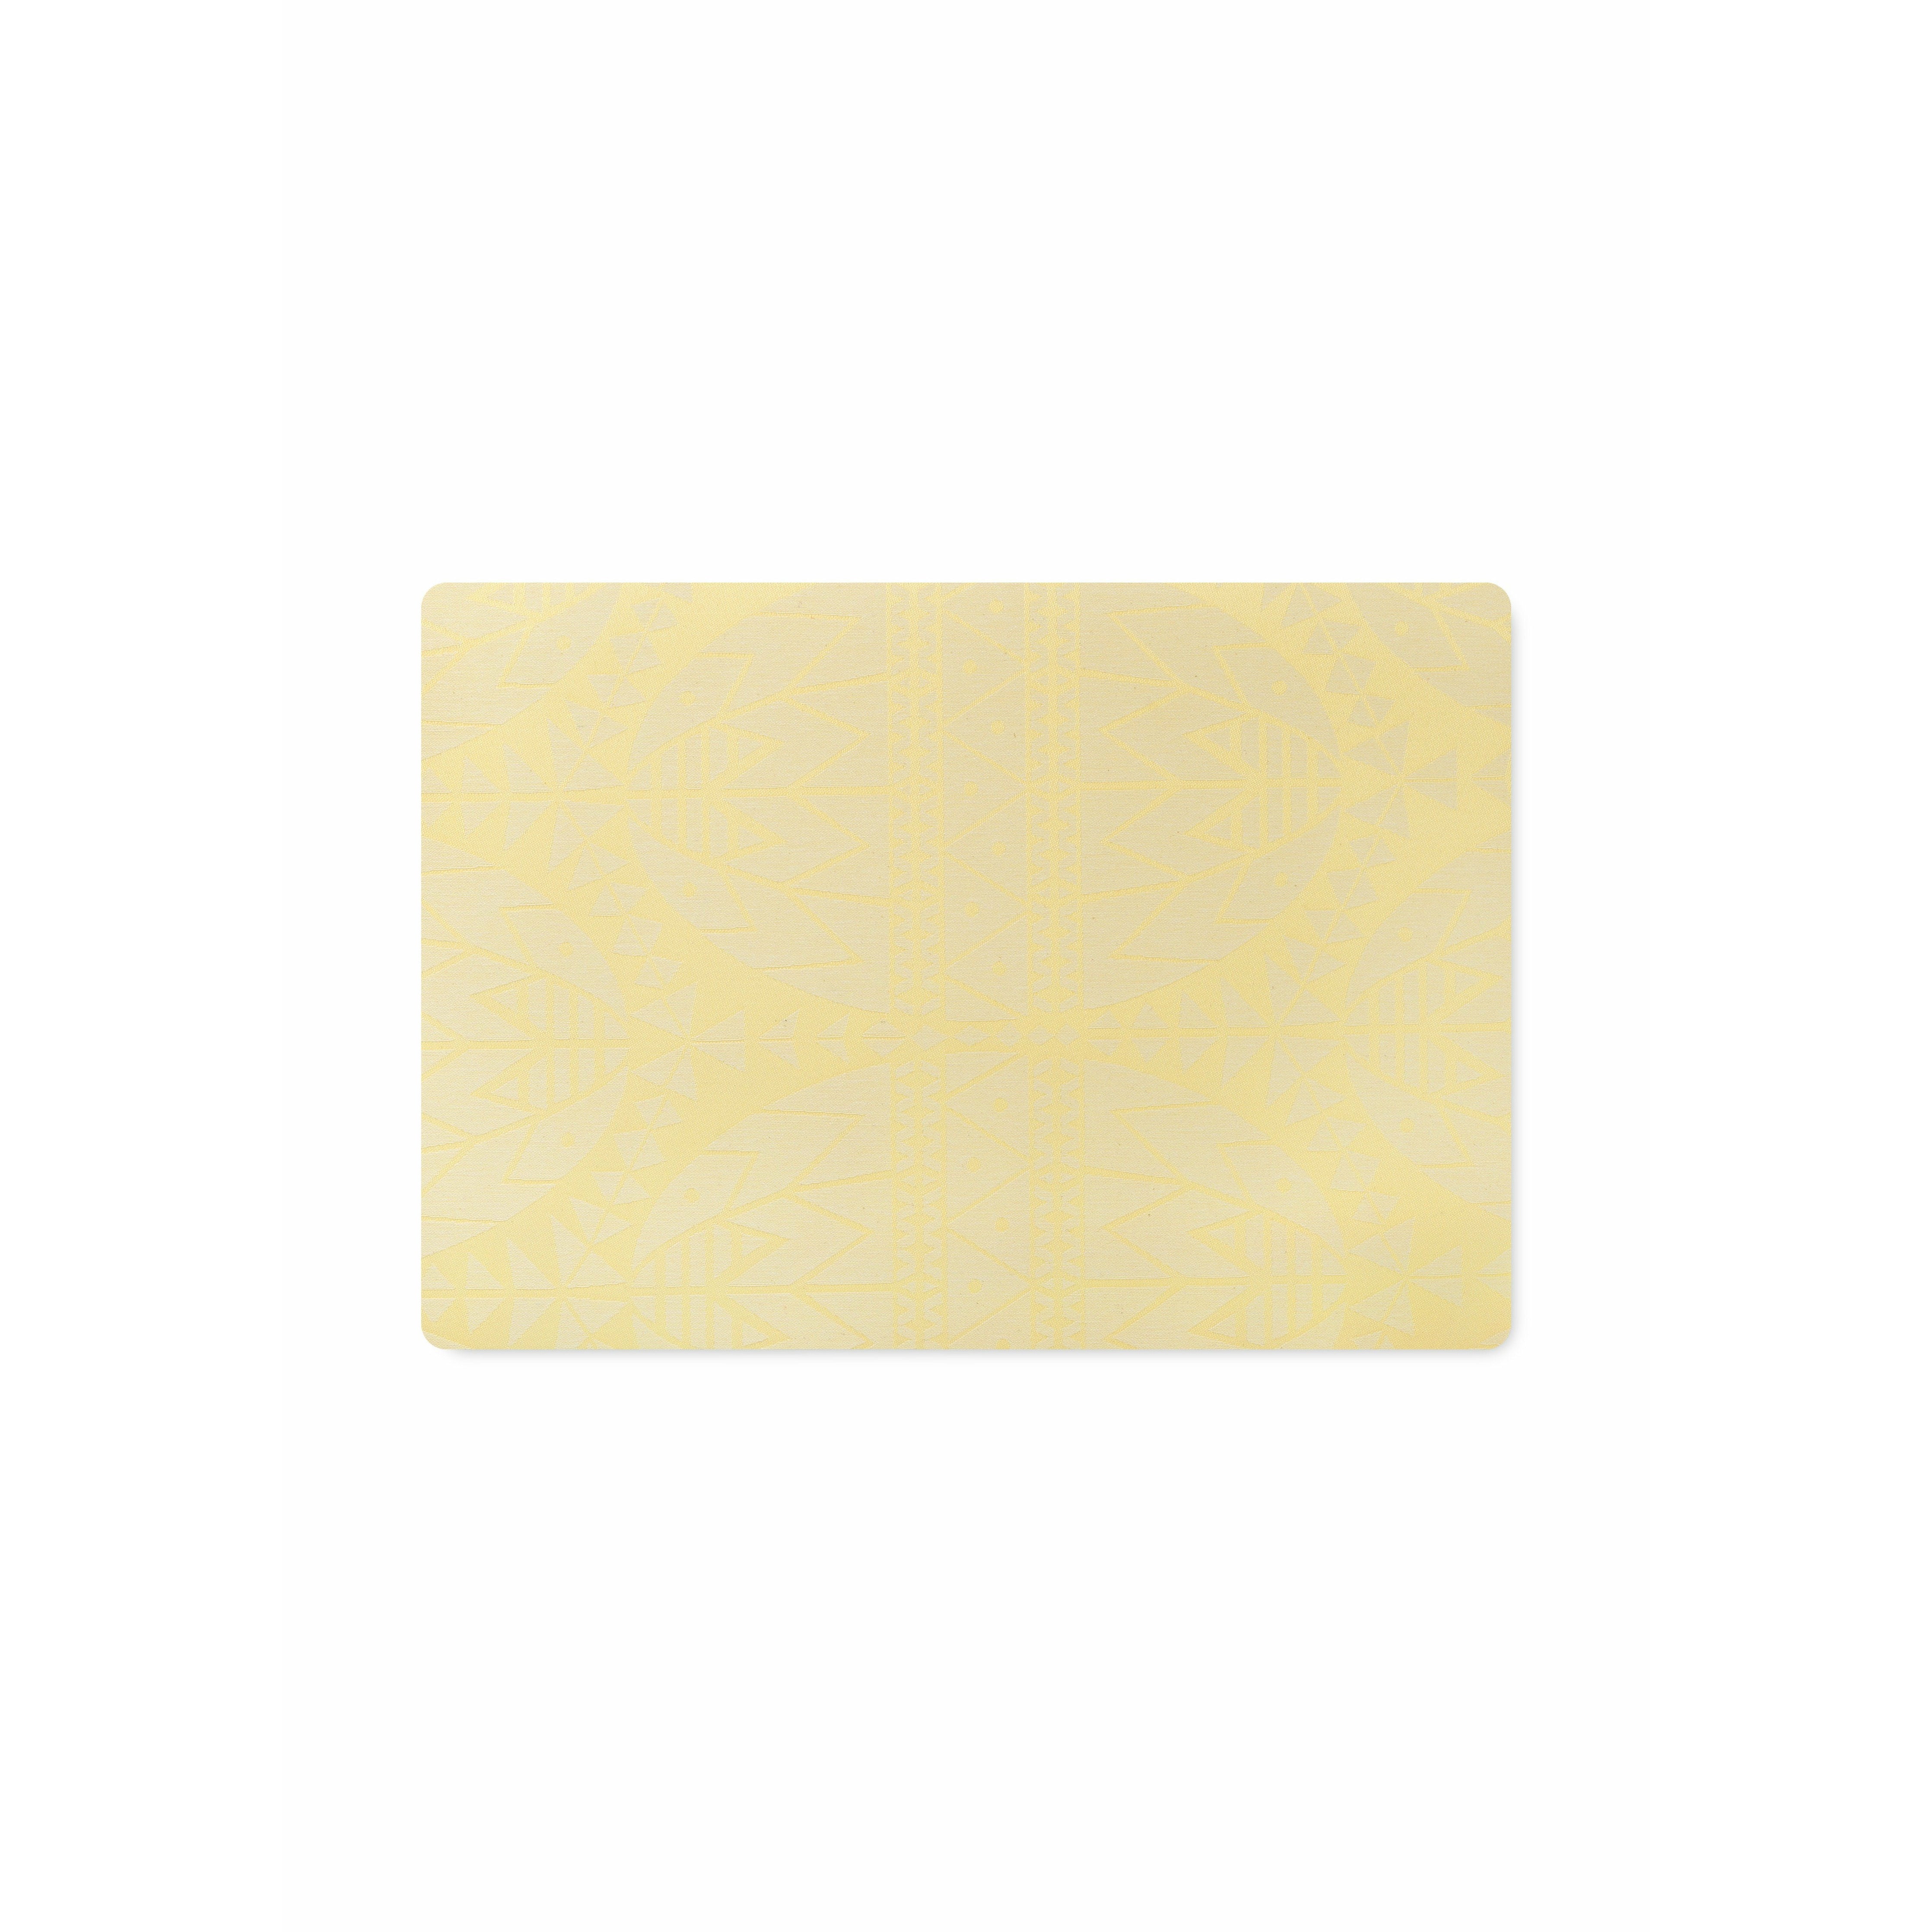 Juna Paas placemat 43x30 cm, geel